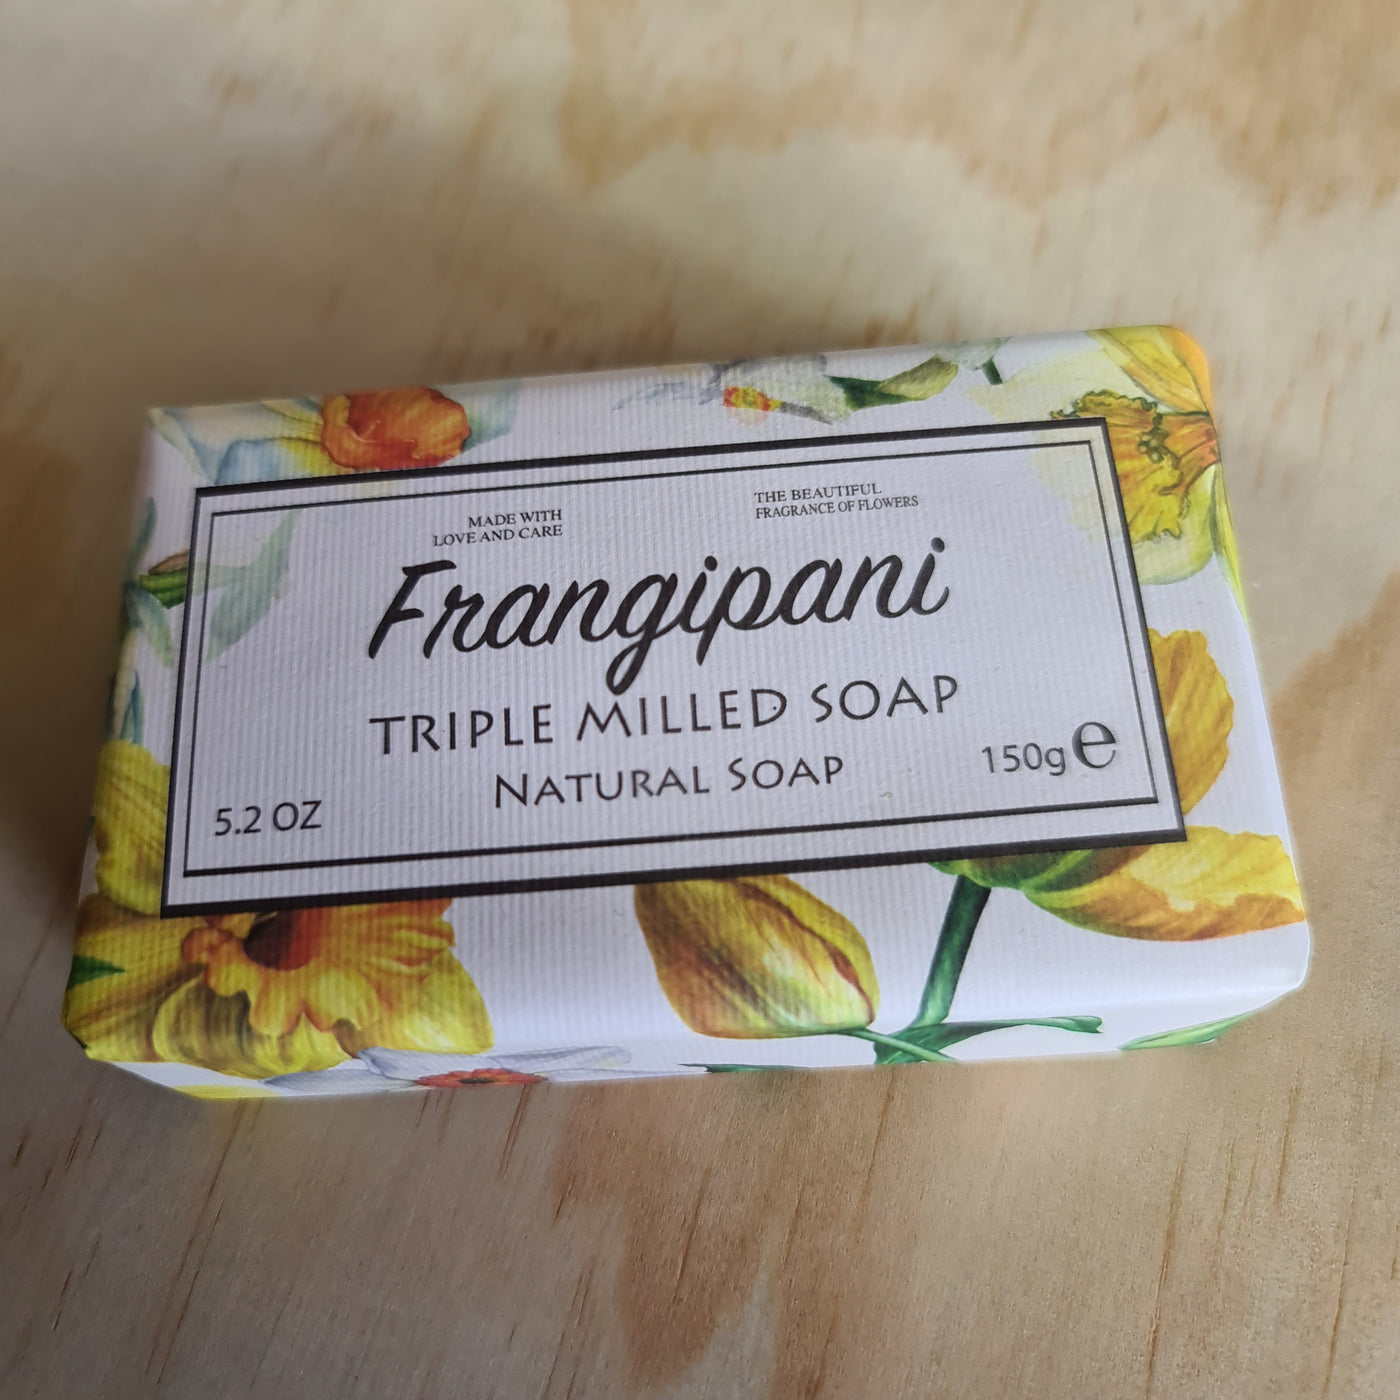 Soap Frangipani